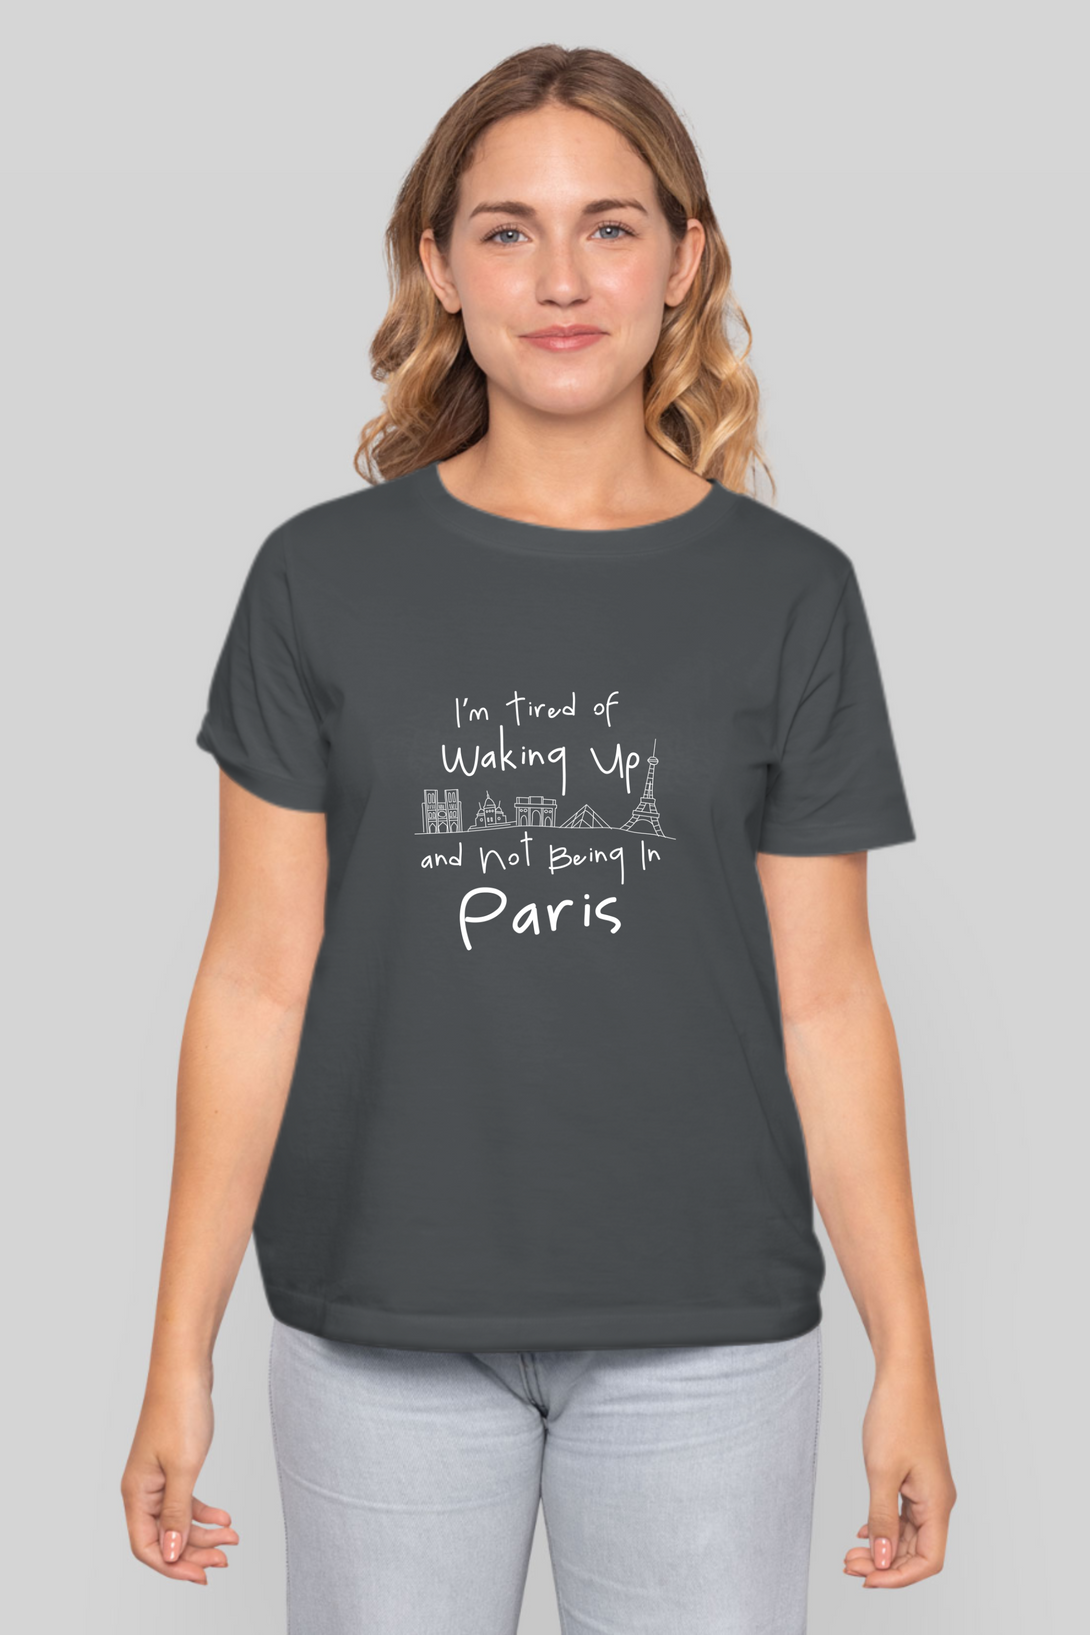 Paris Dreaming Printed T-Shirt For Women - WowWaves - 7